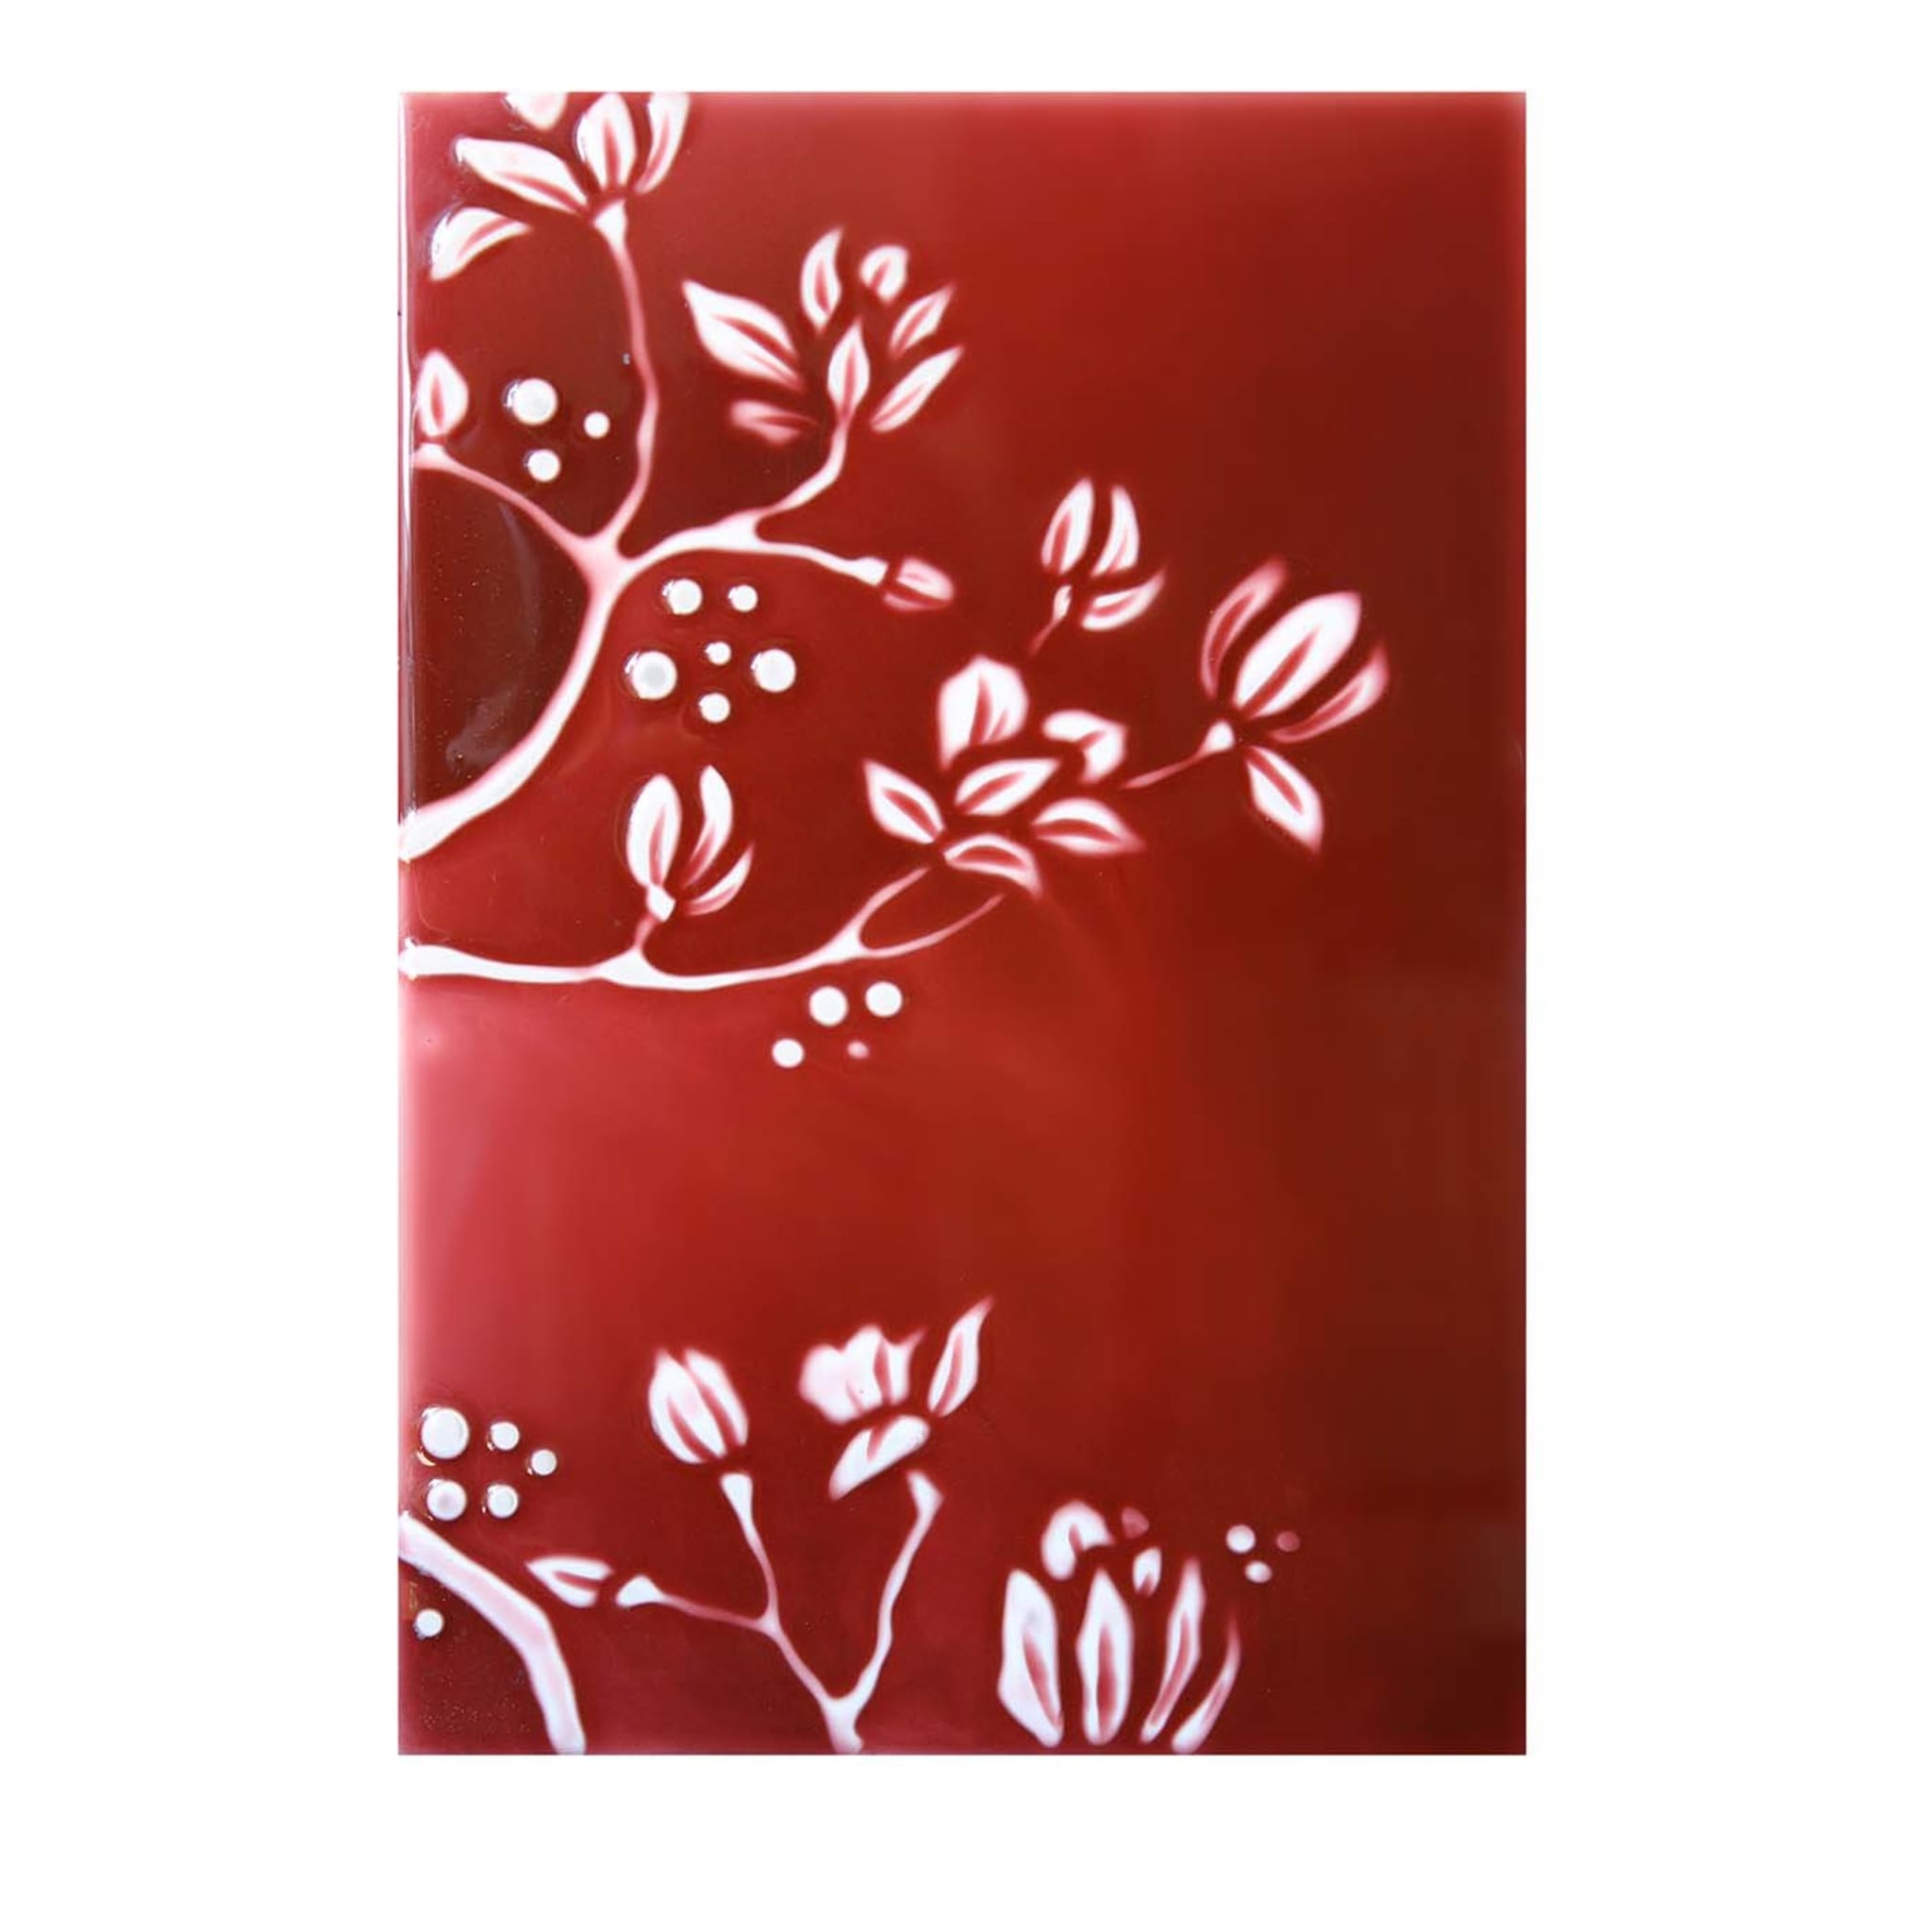 Panel decorativo en relieve de resina roja RD90 - Vista principal